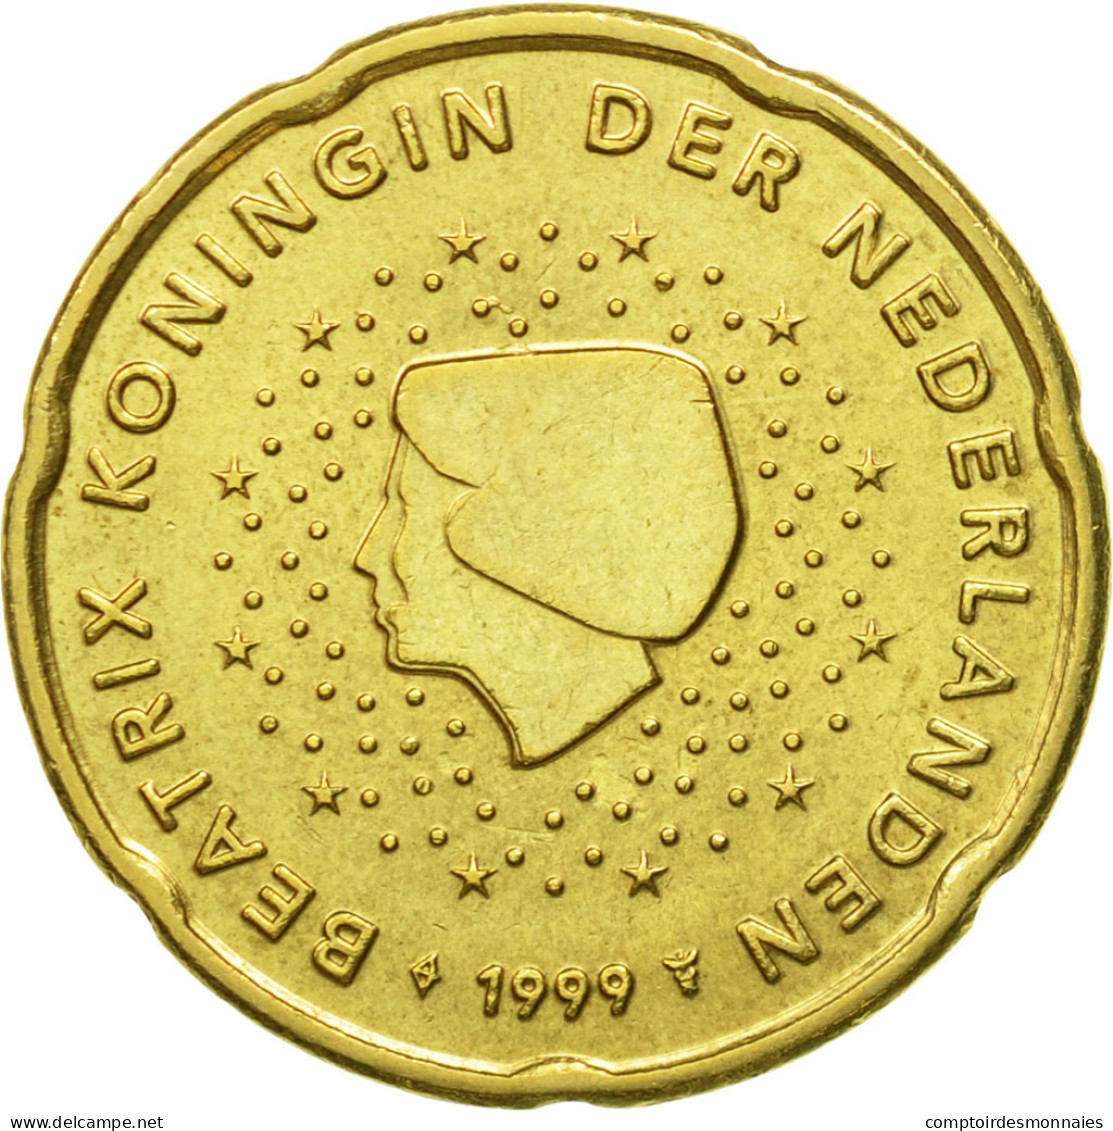 Pays-Bas, 20 Euro Cent, 1999, TTB+, Laiton, KM:238 - Netherlands